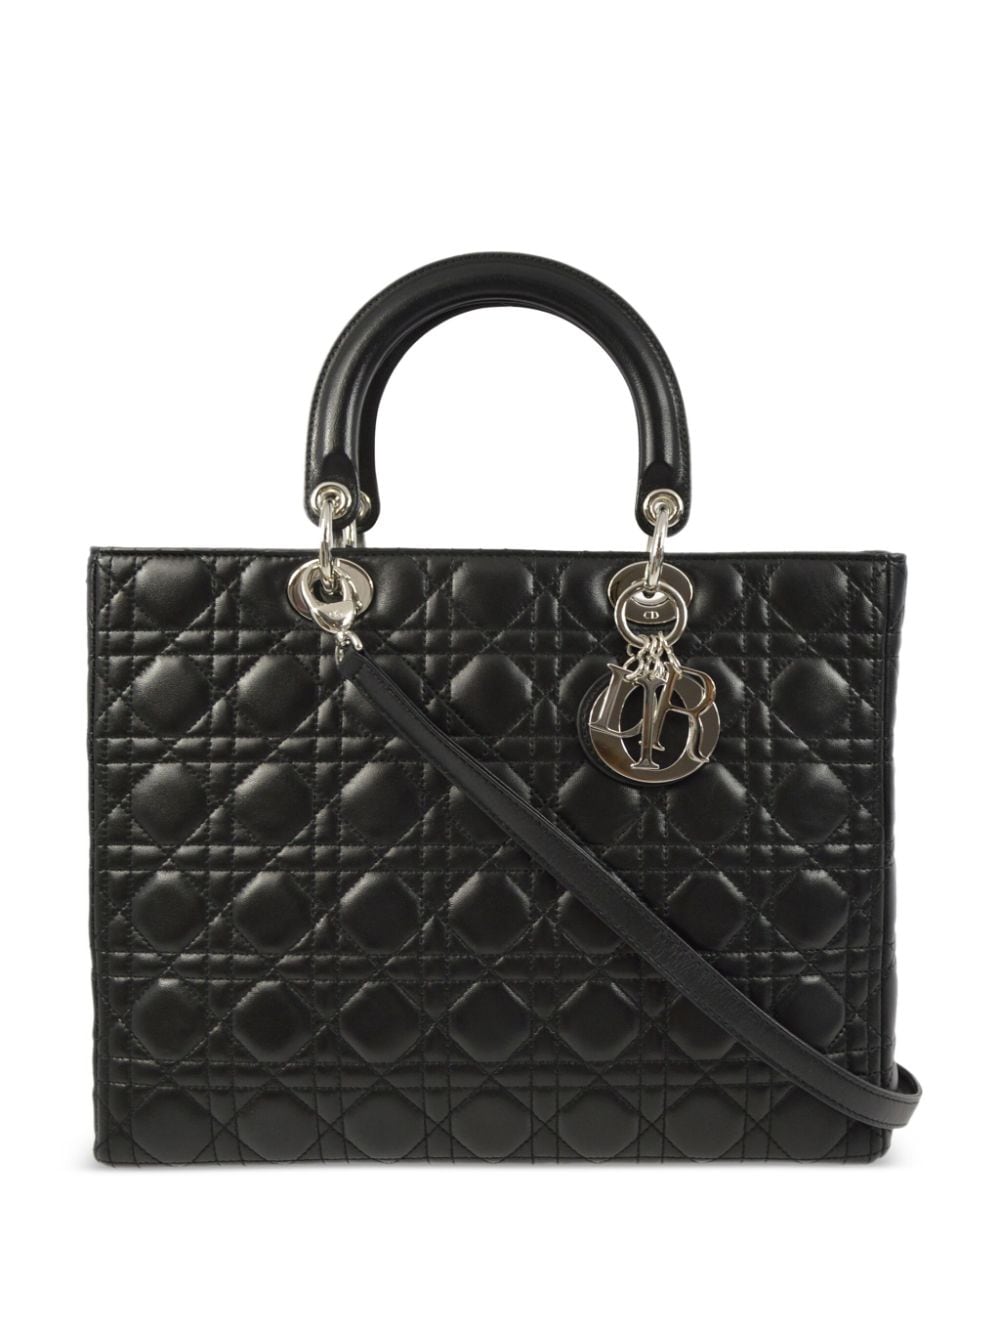 2008 large Cannage Lady Dior two-way handbag